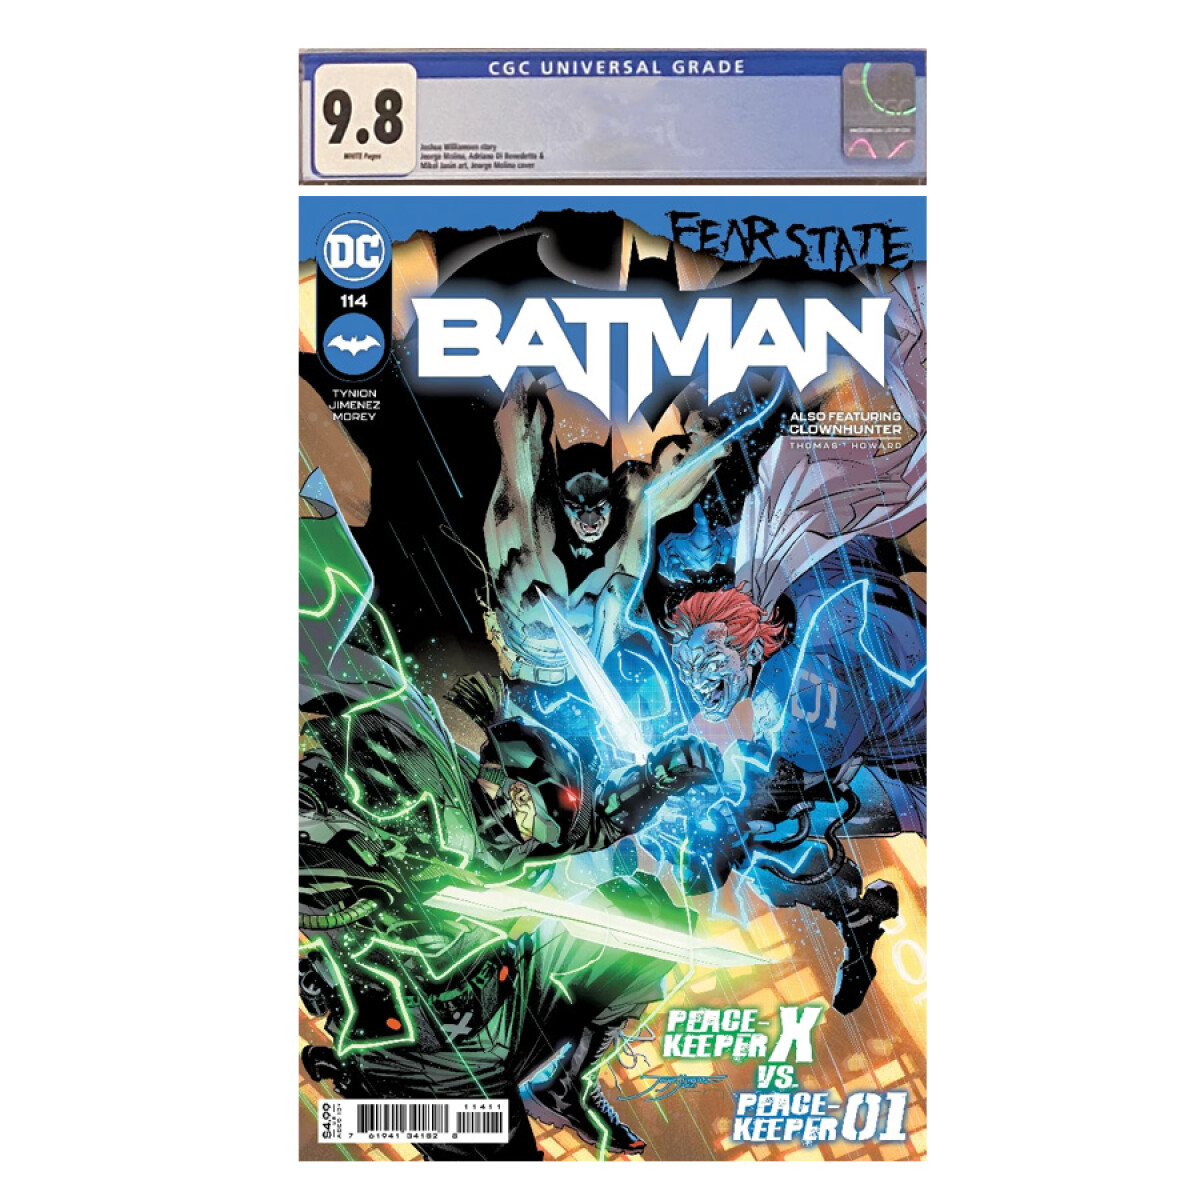 CGC Universal Grade Comic - Batman Fear State! · Batman #114 